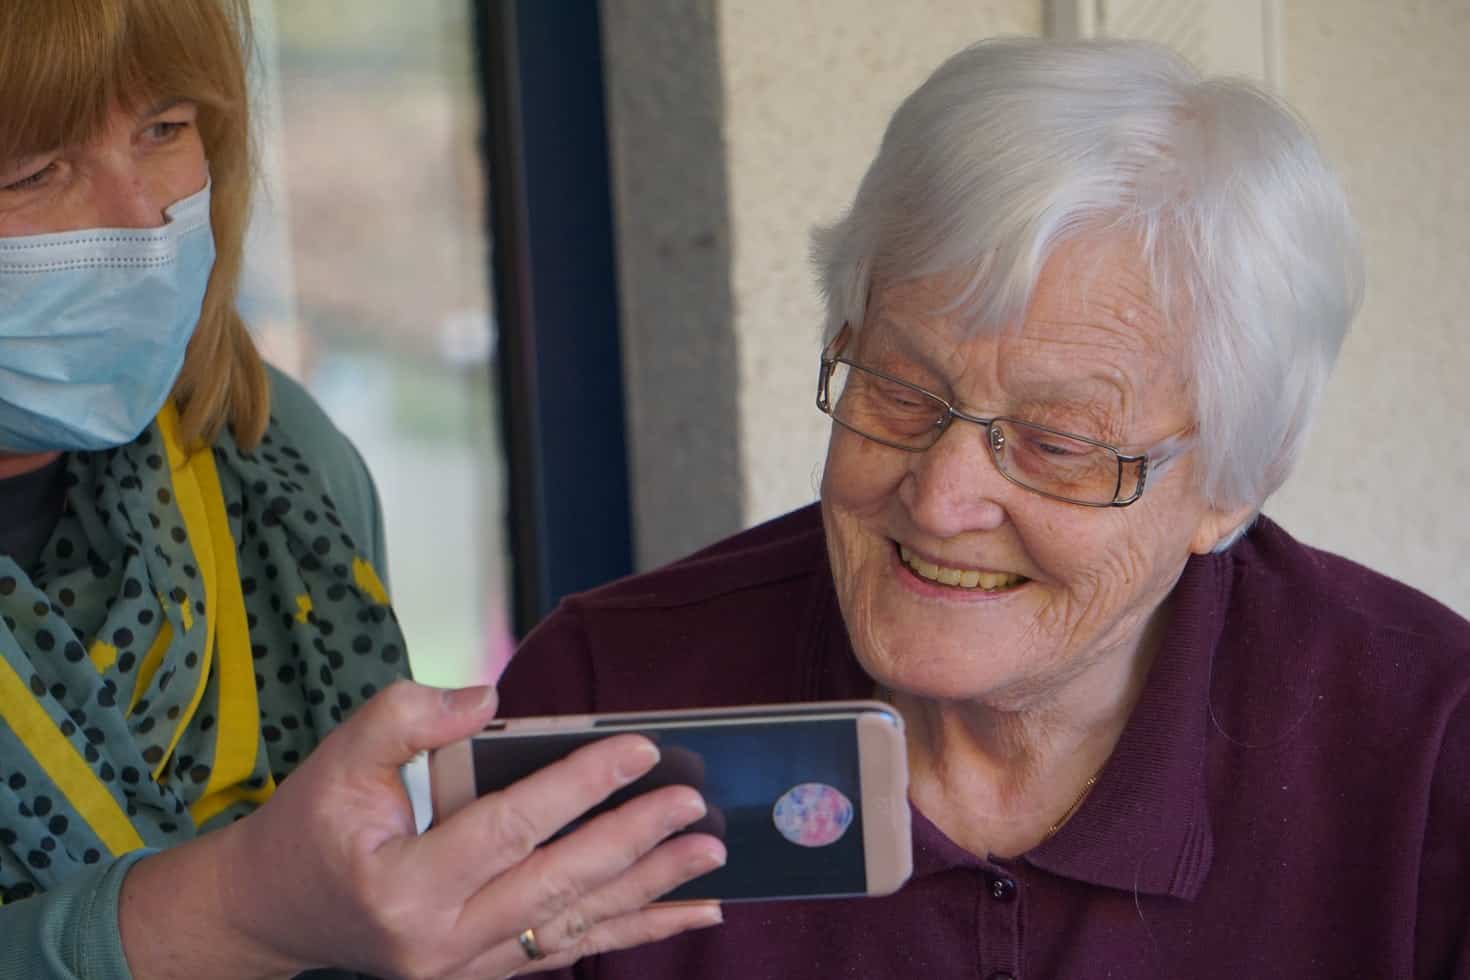 10 Helpful Apps for Senior Citizens